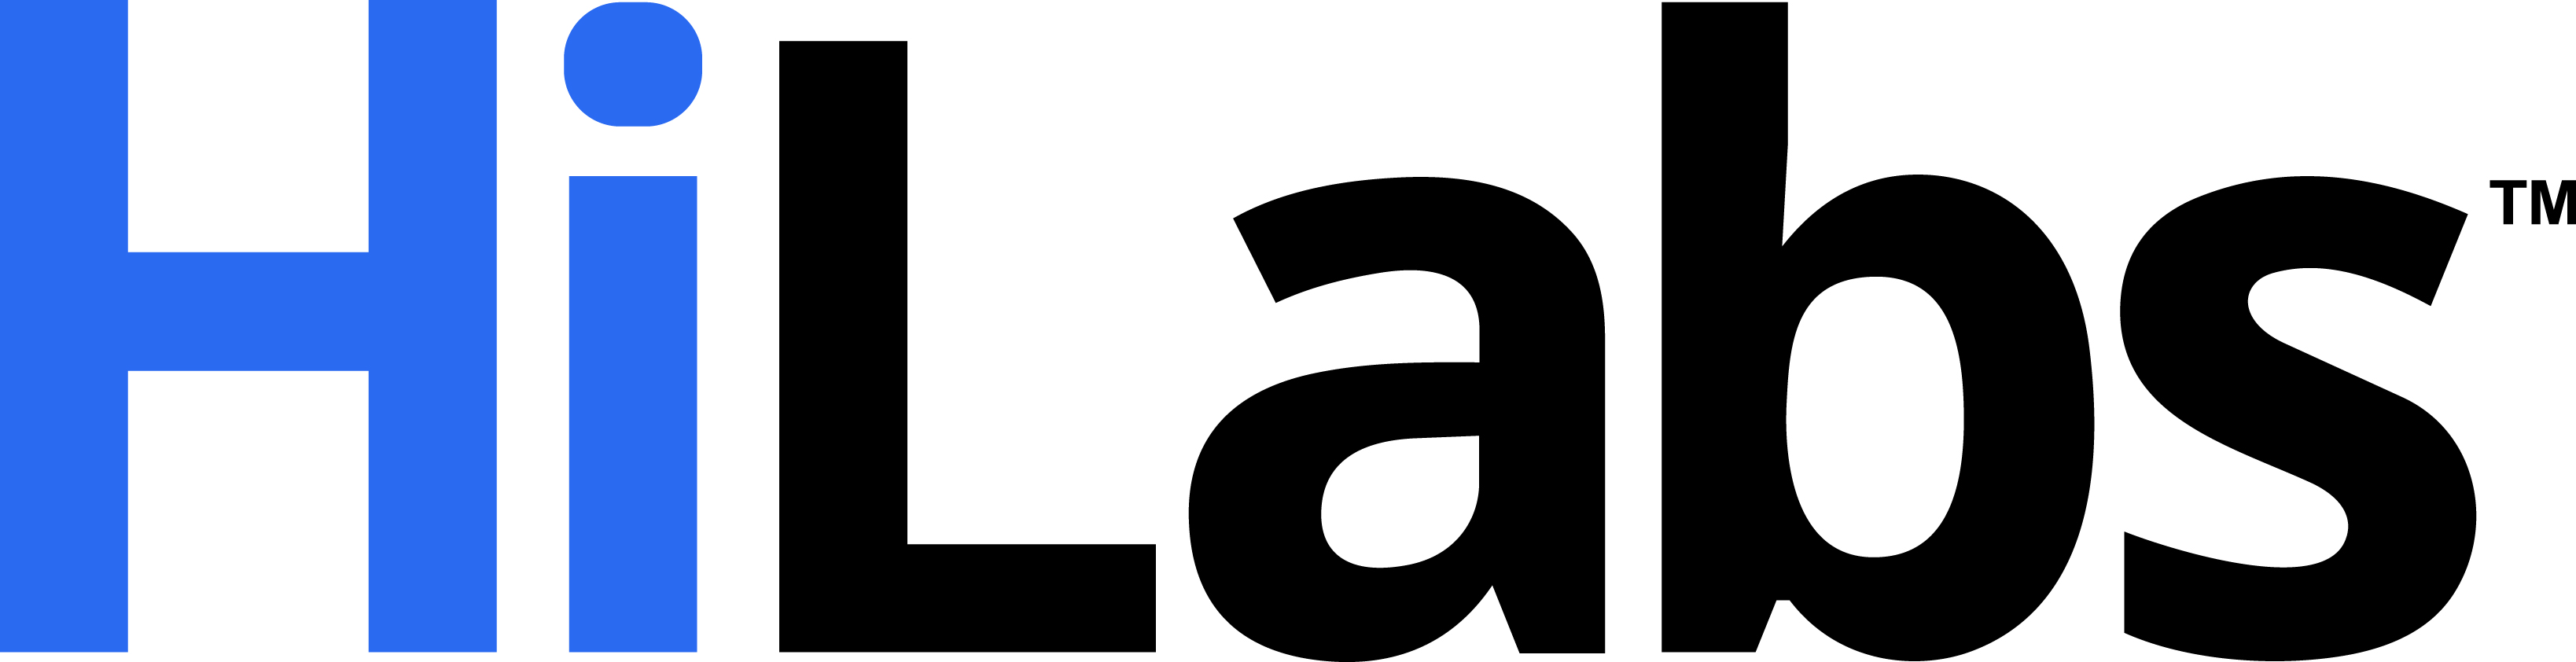 HiLabs_logo